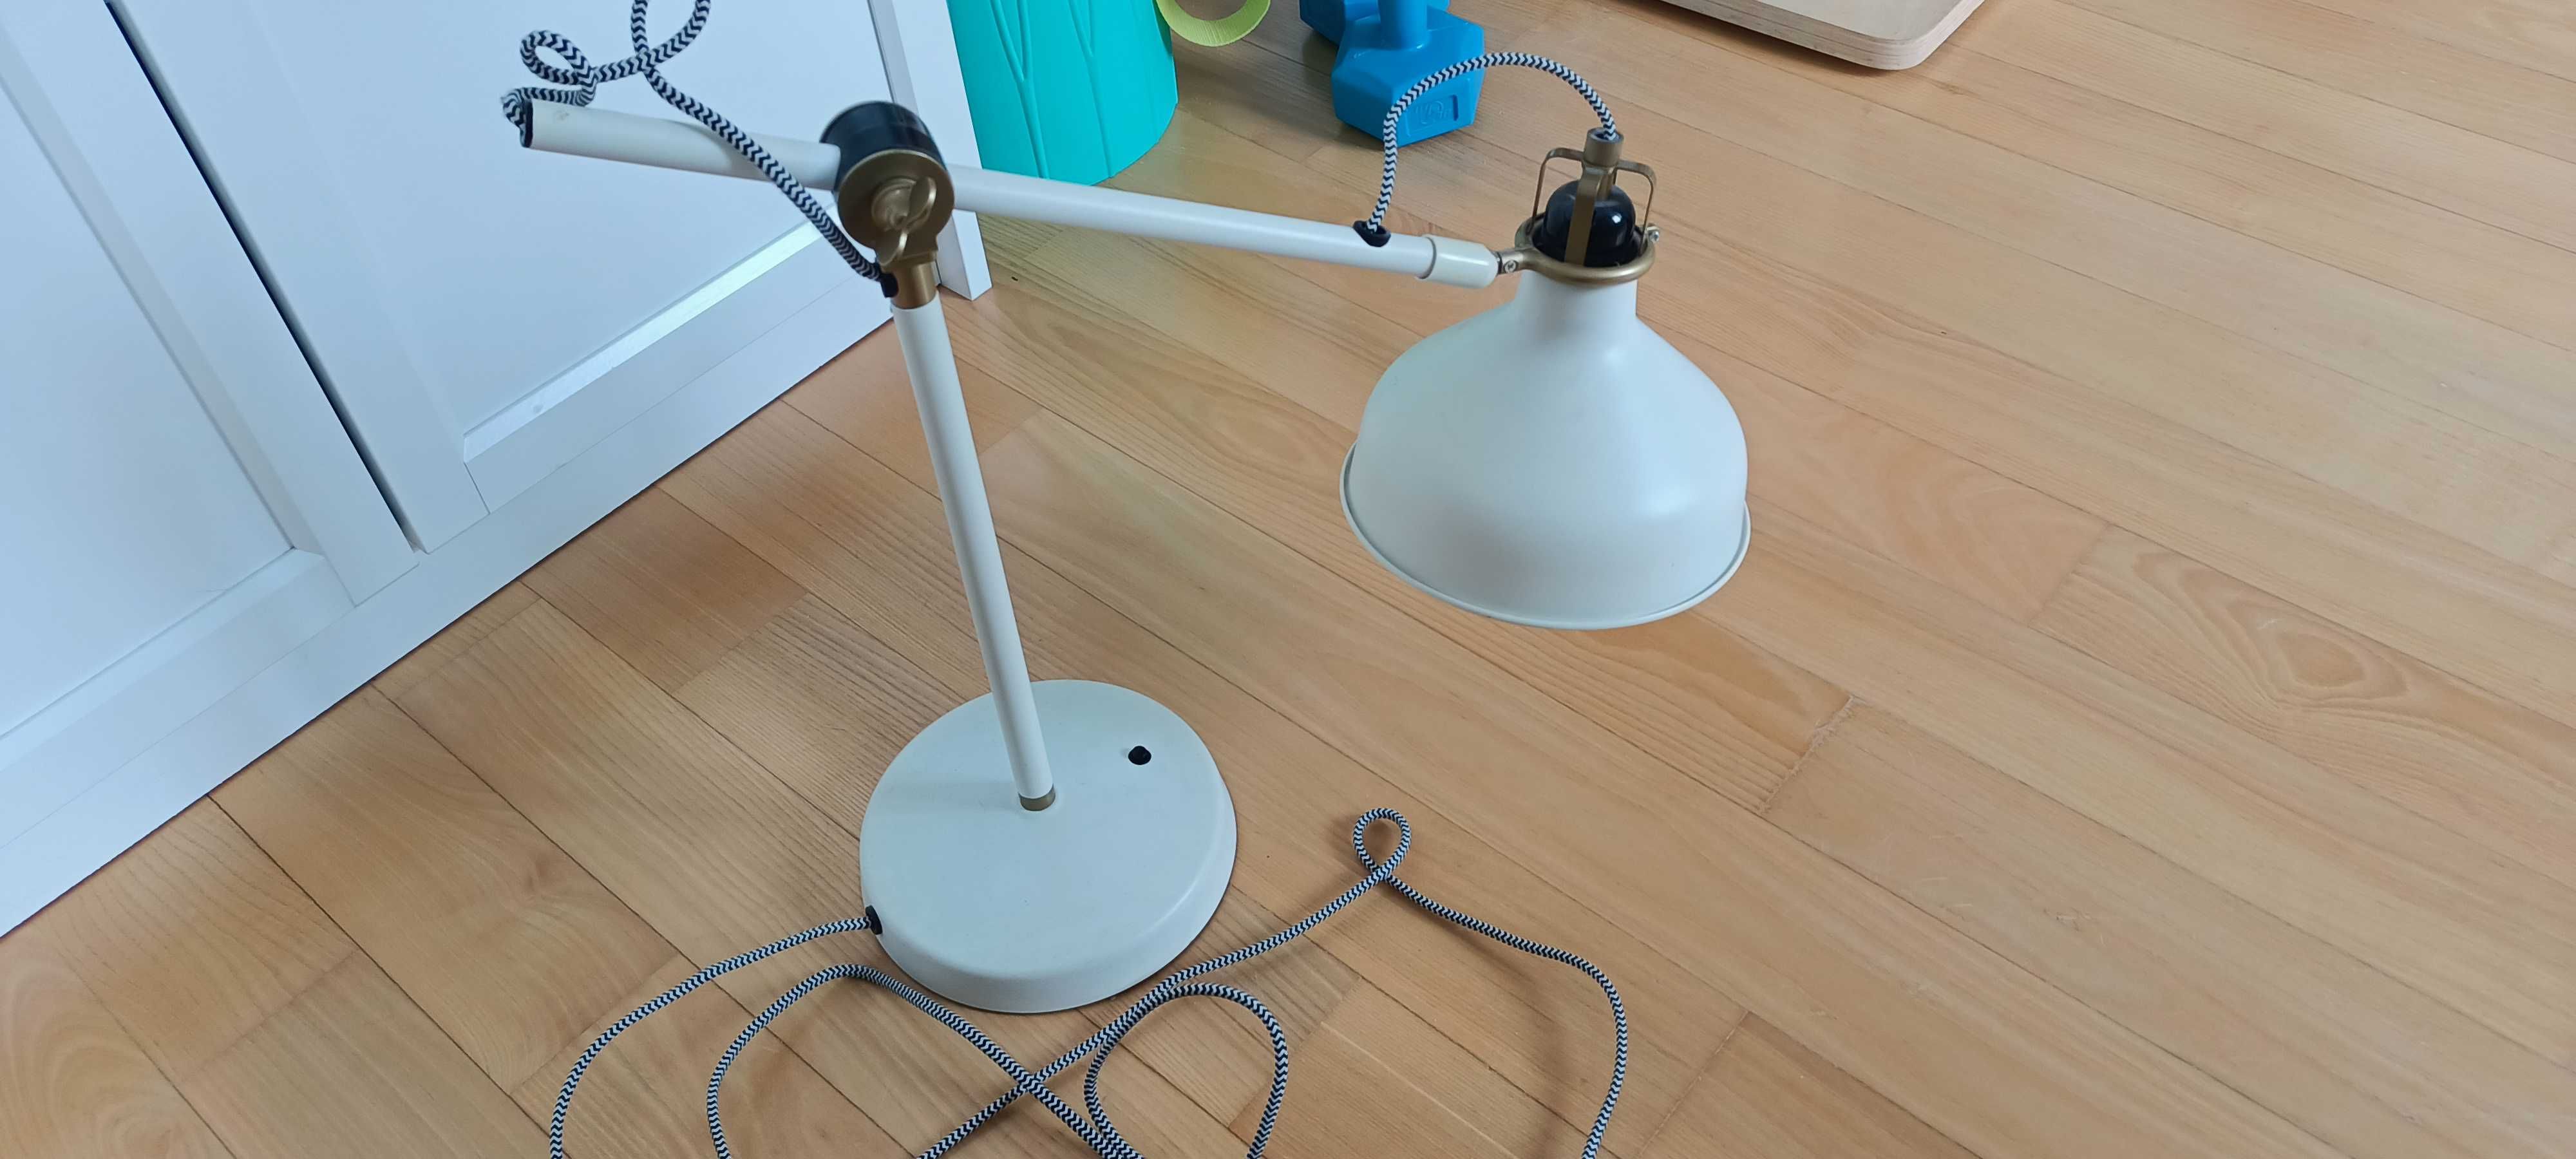 Lampka IKEA biała elegancka metalowa na biurko dla dziecka do biura